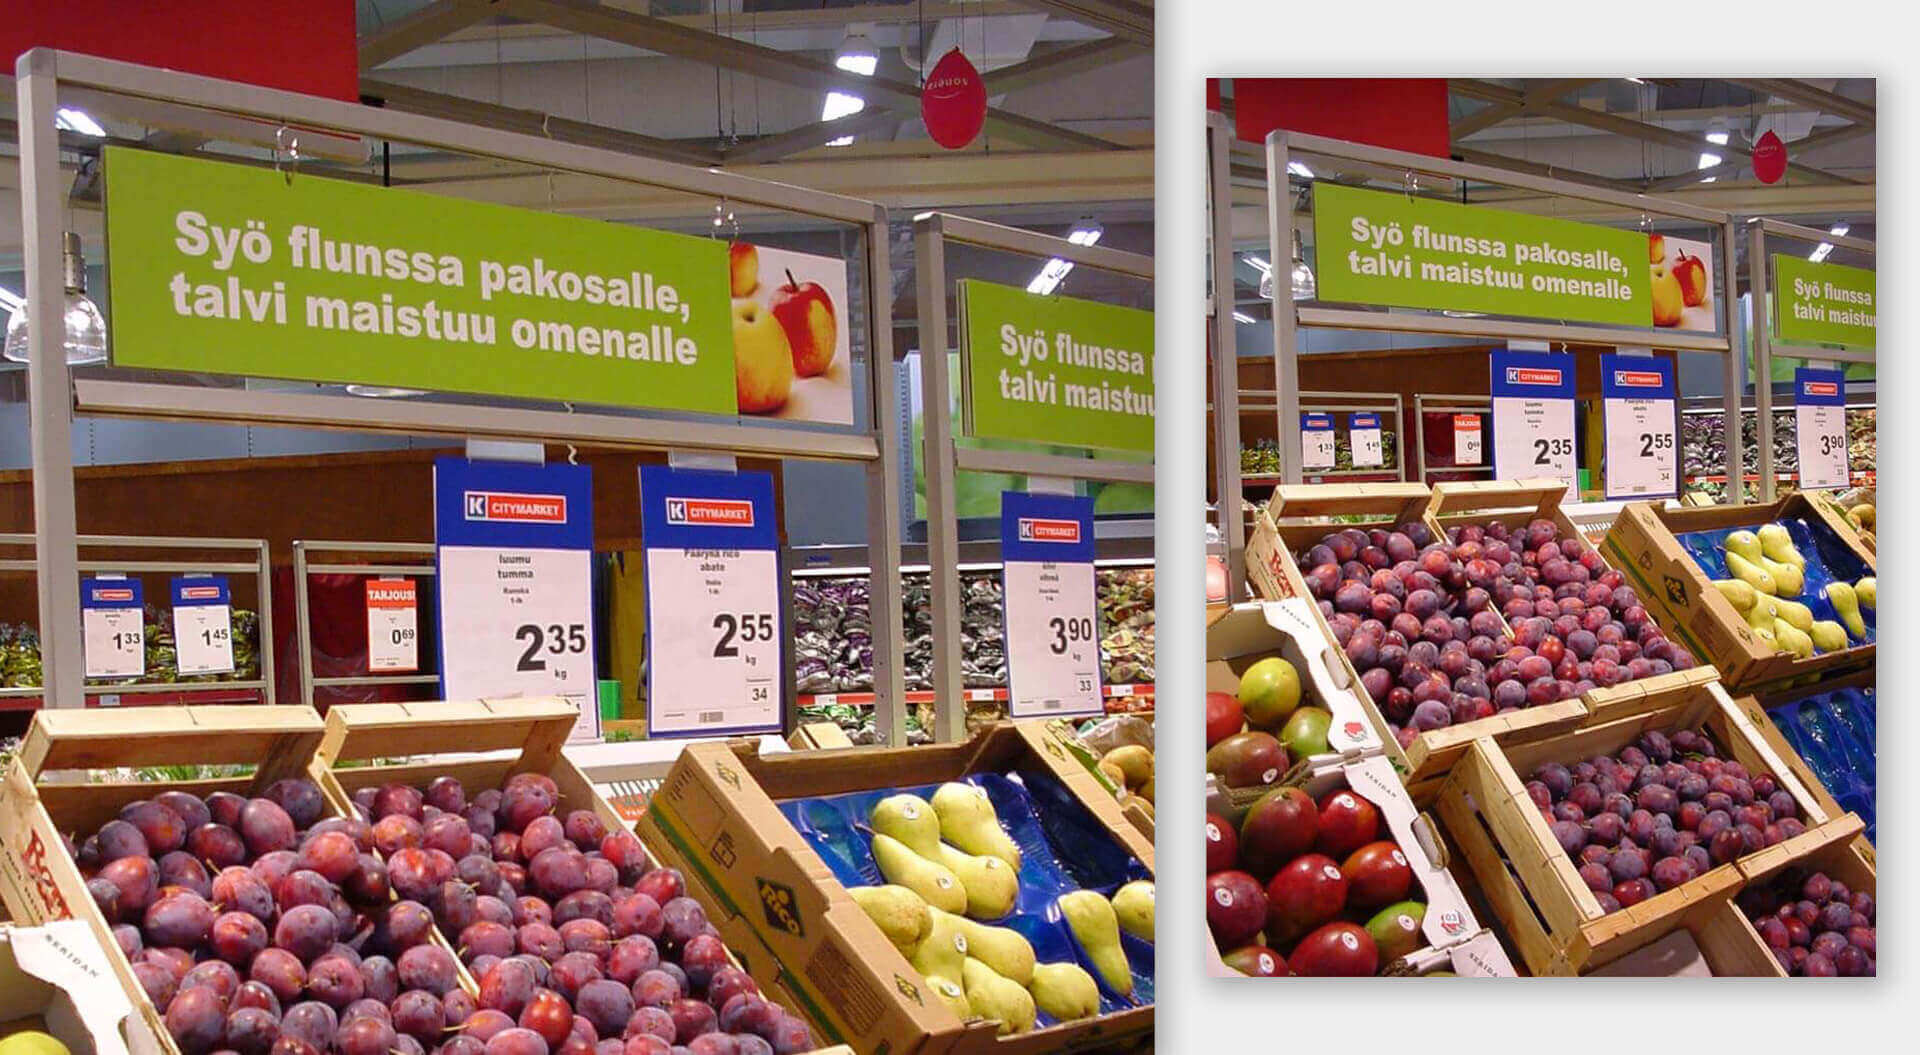 K CityMarket hypermarket Finland, fresh friut and vegetables merchandising and branding